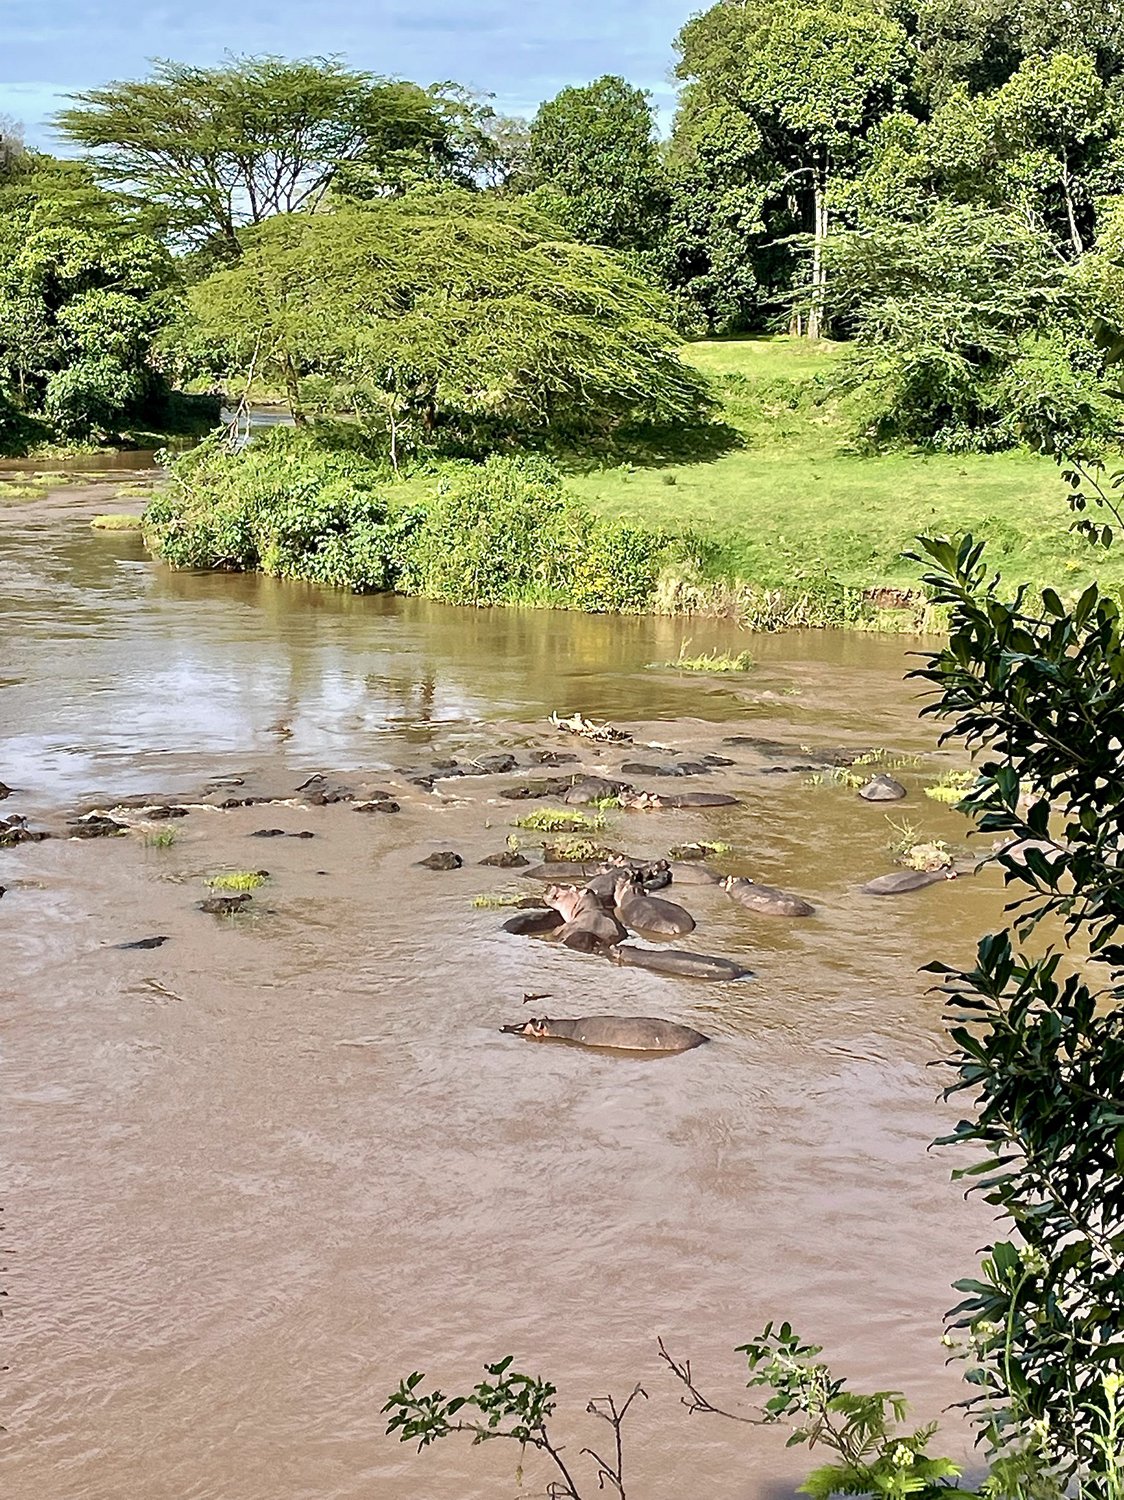 At least a dozen Hippo in the river